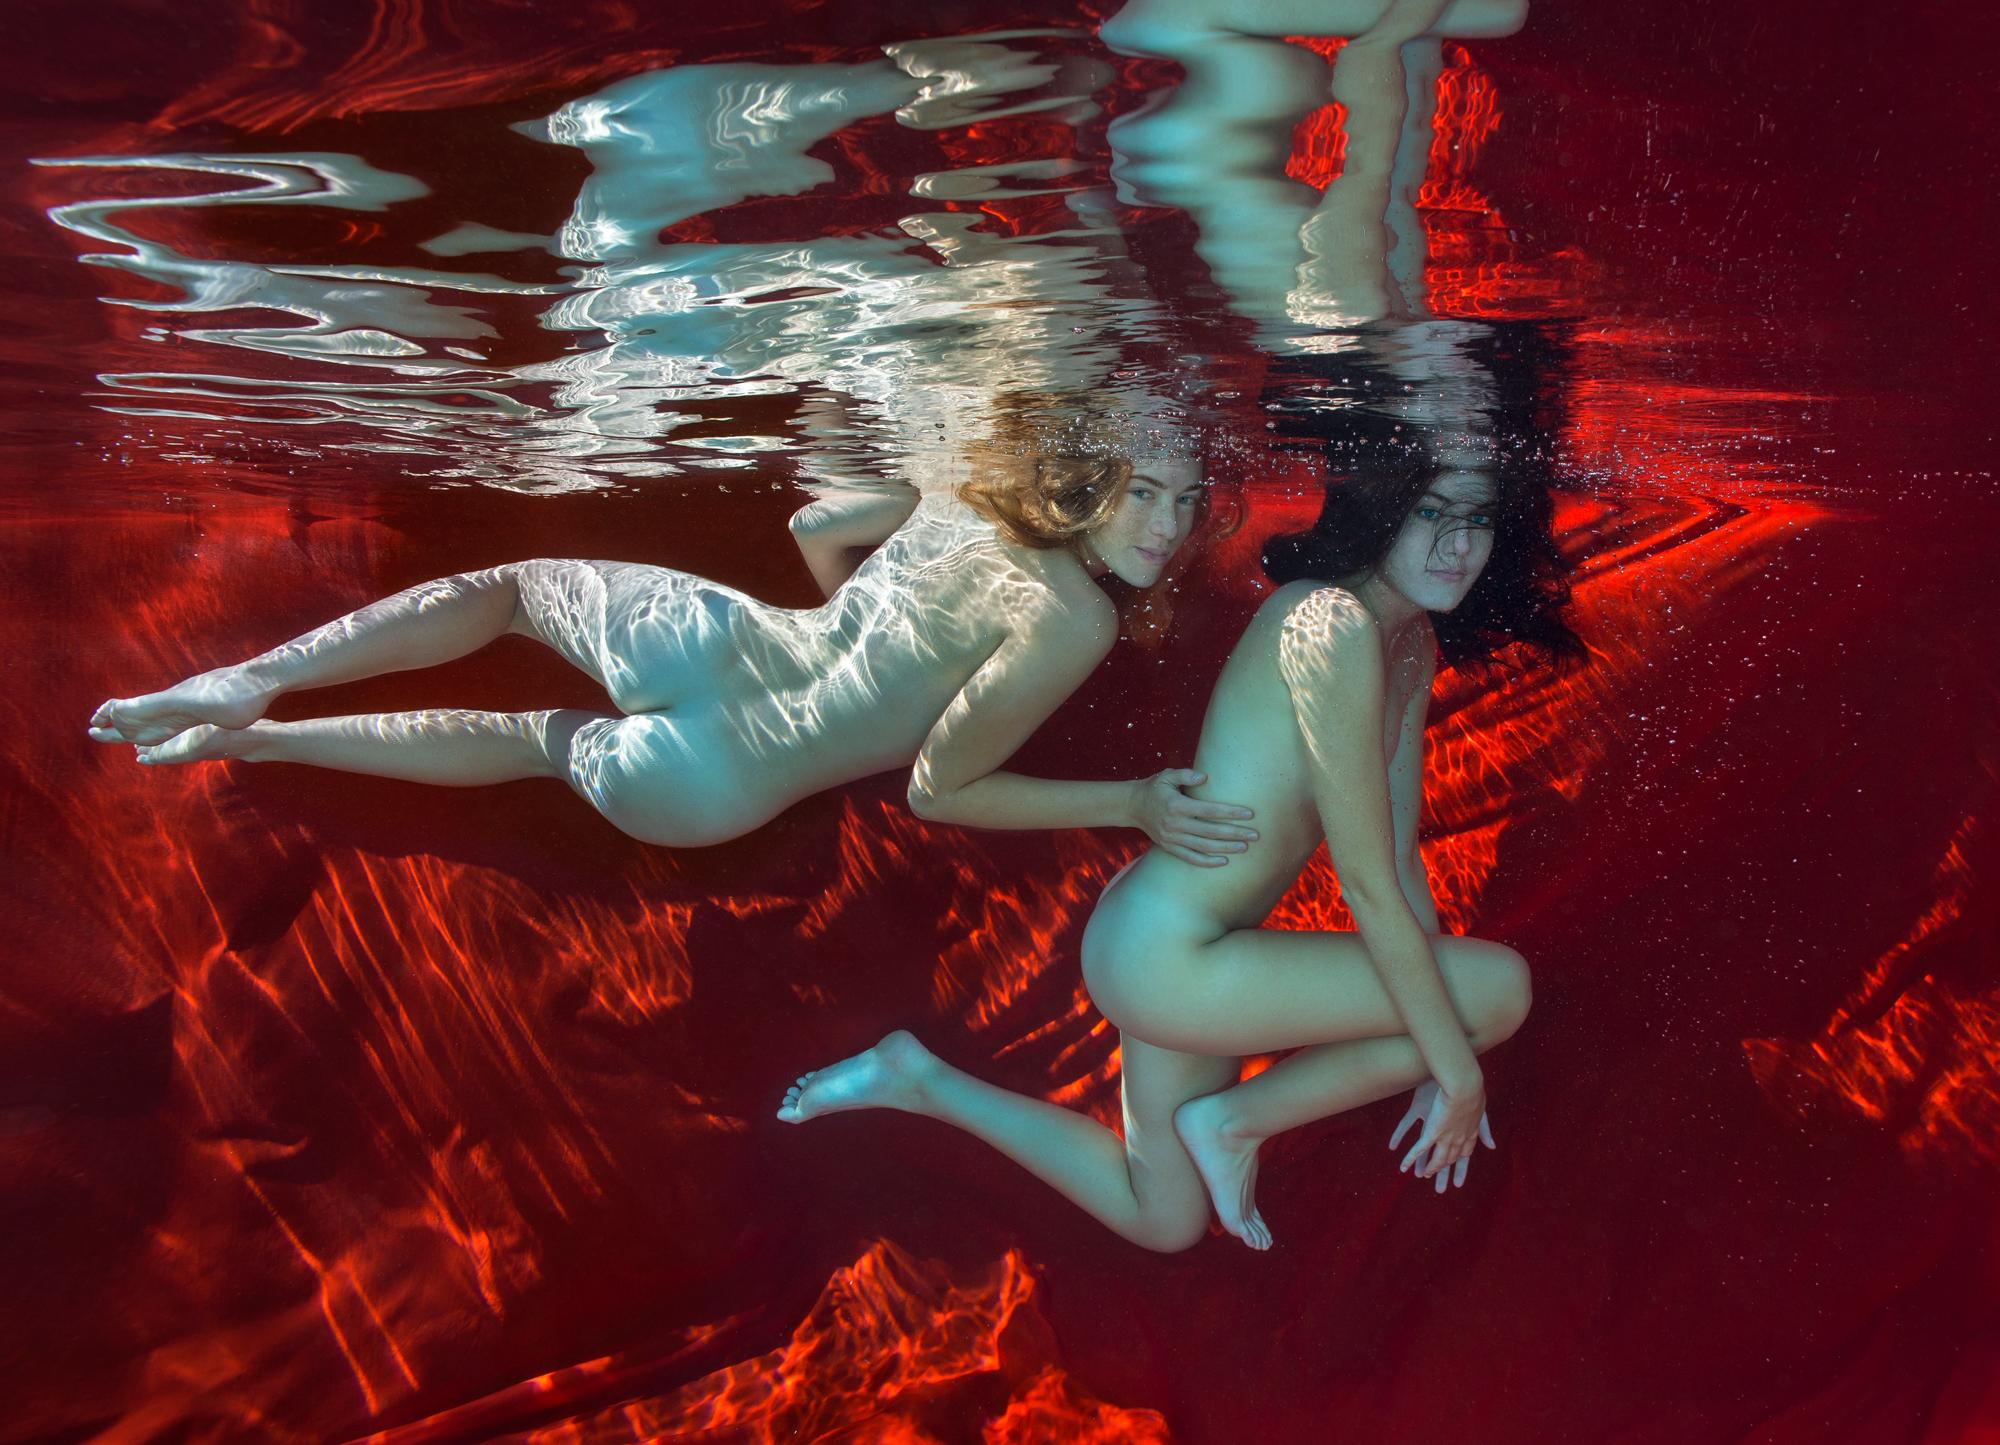 Alex Sher Nude Photograph - Golden Drops - underwater nude photograph - archival pigment print 18x24"